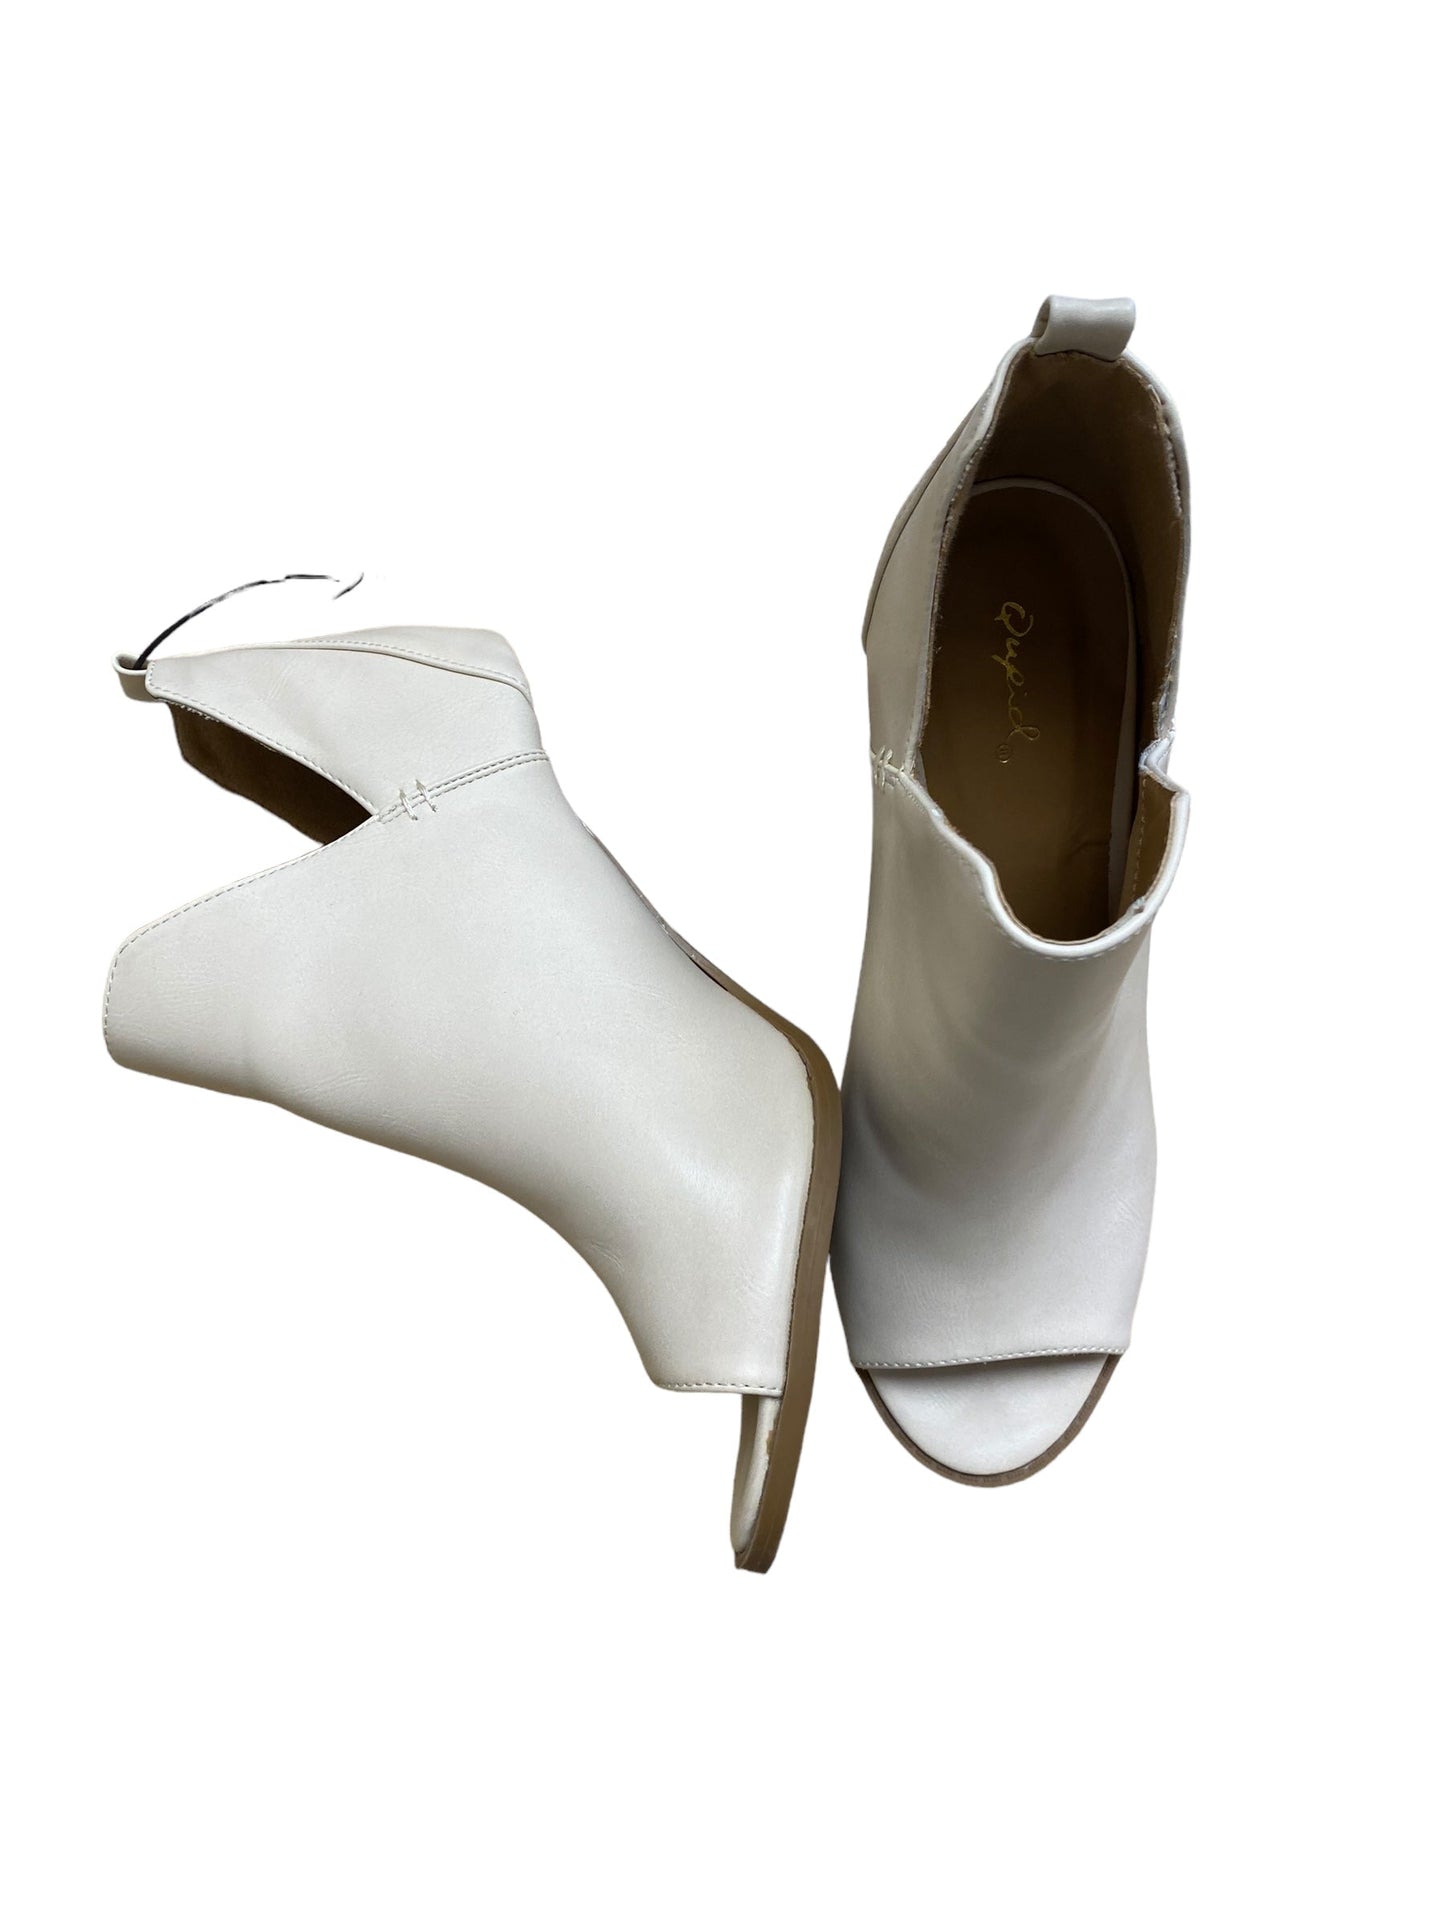 Cream Shoes Heels Block Qupid, Size 9